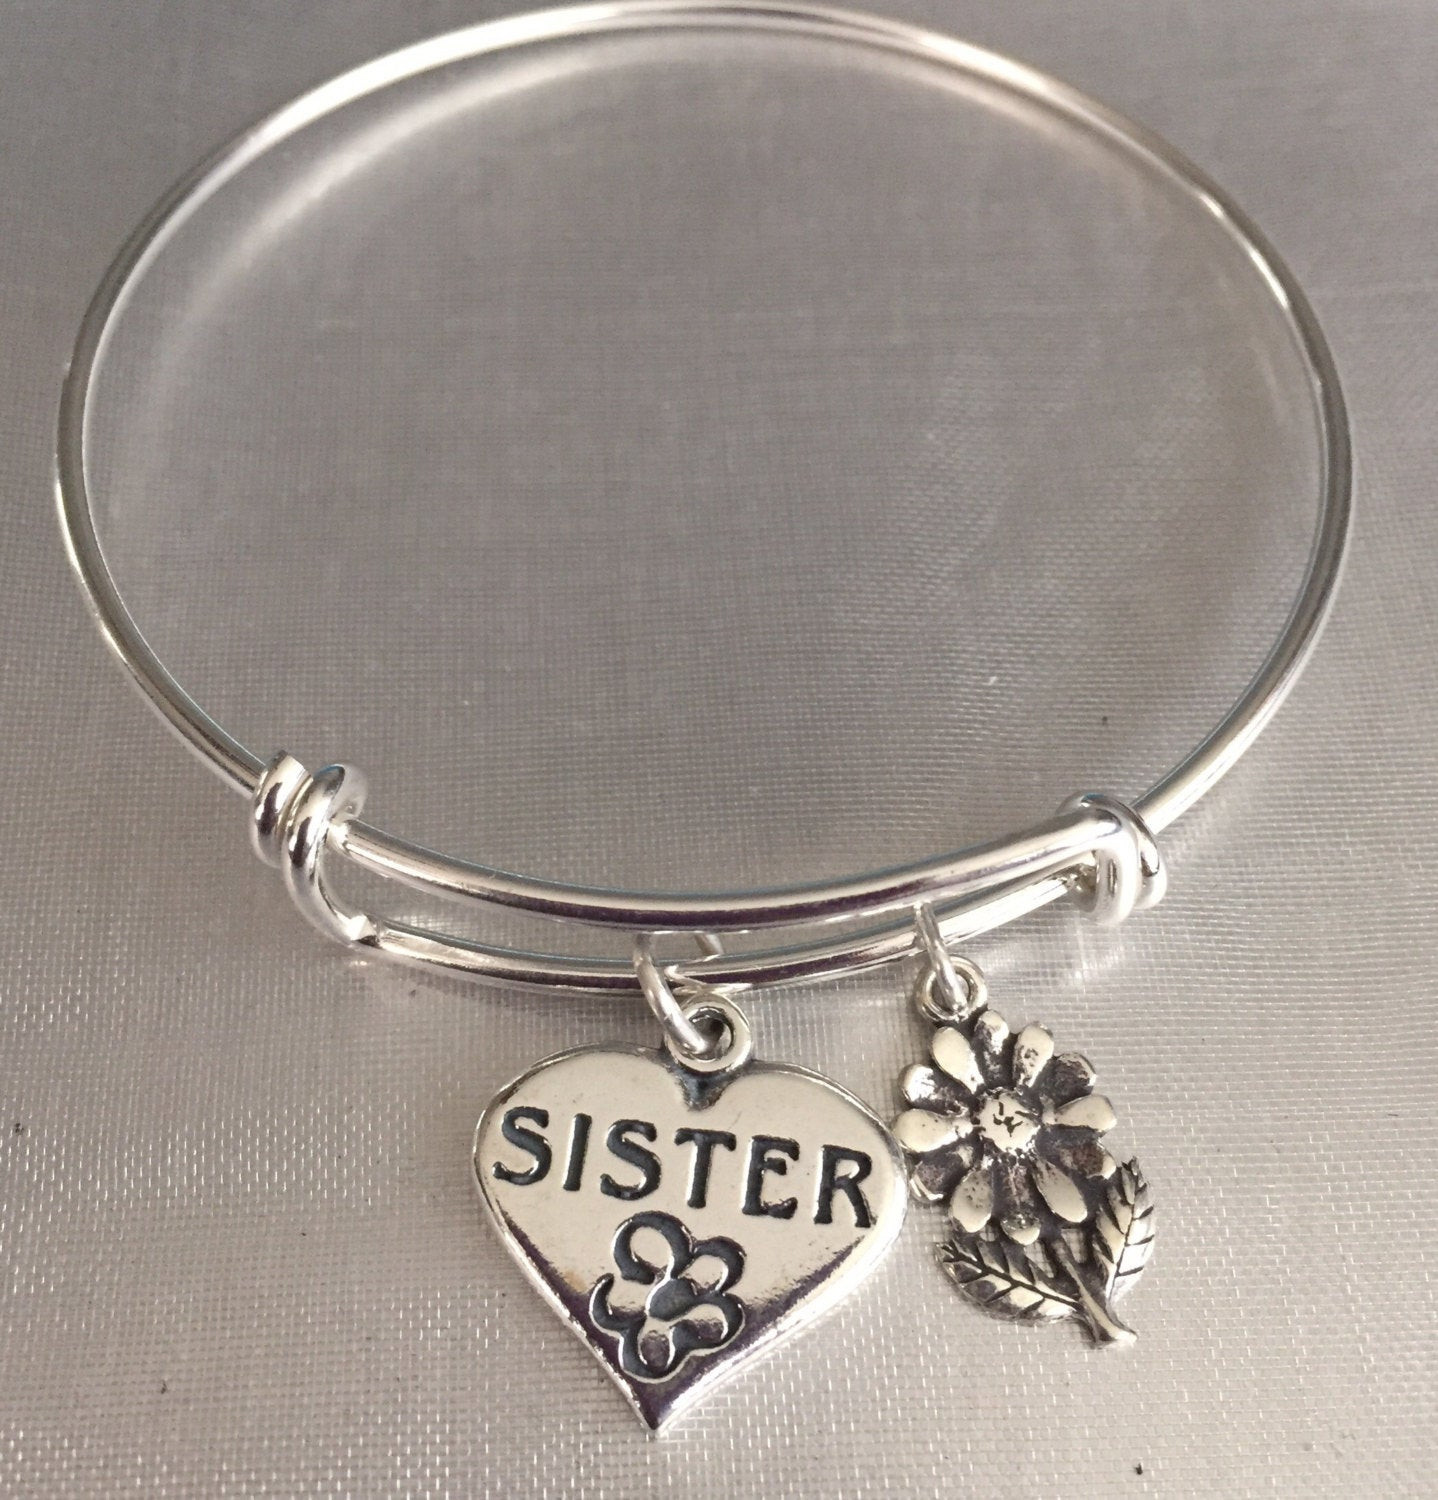 Sterling Silver Sister Bracelet
 Sister bracelet sterling silver charms and bracelet